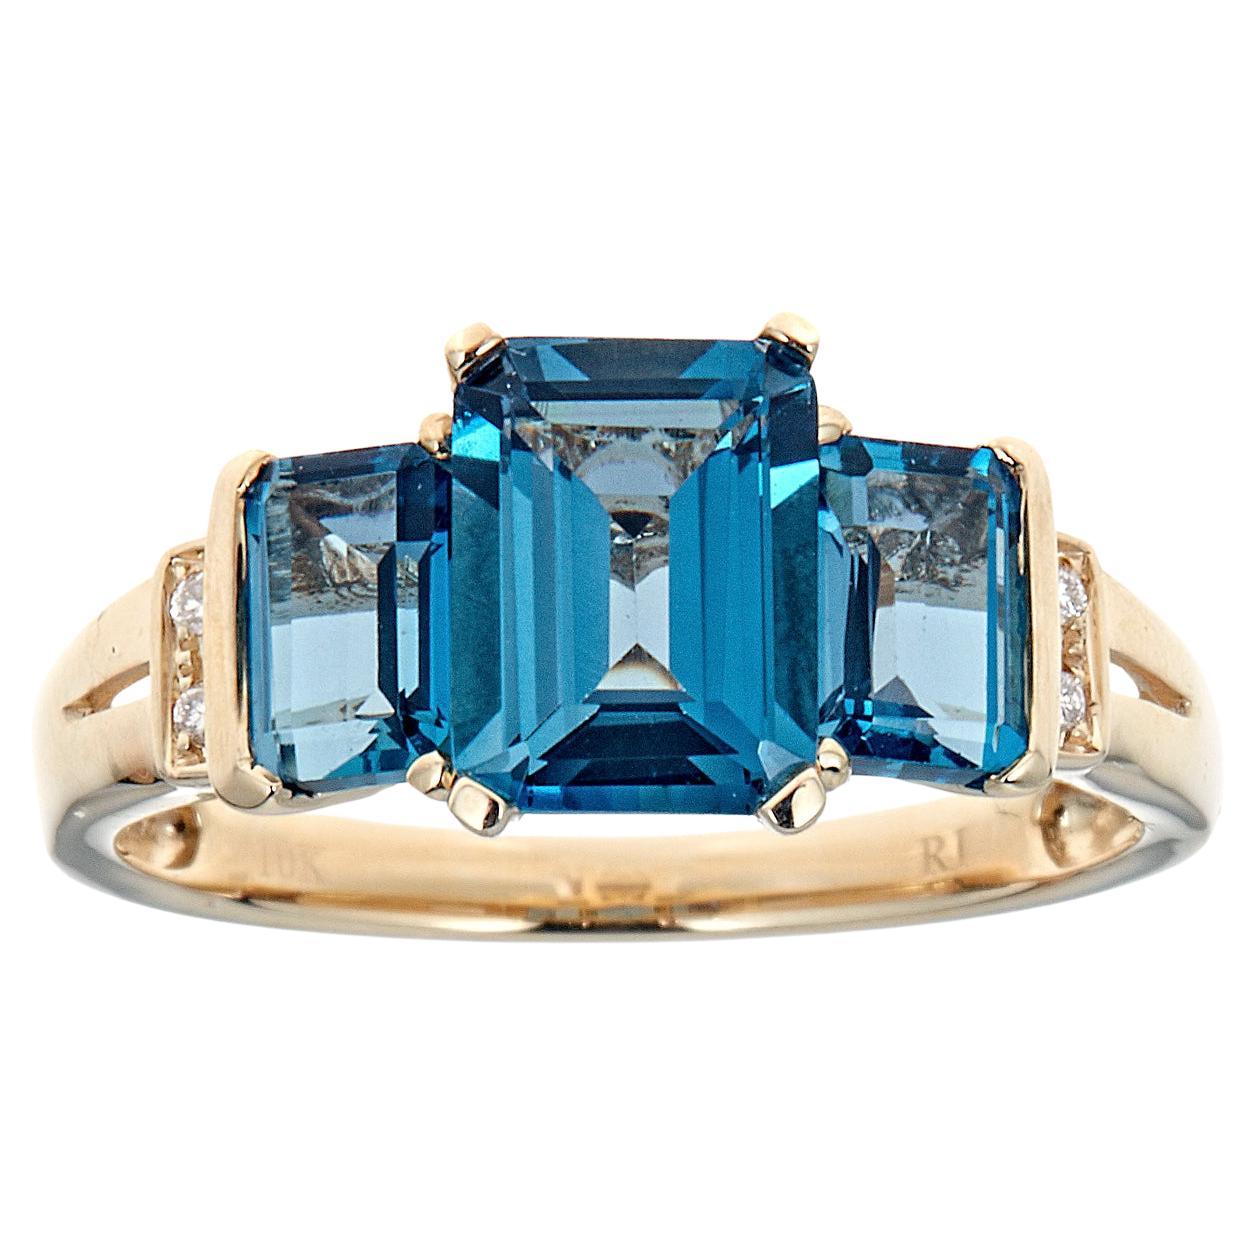 3.65 Carat Emerald-Cut London Blue Topaz Diamond Accents 10K Yellow Gold Ring